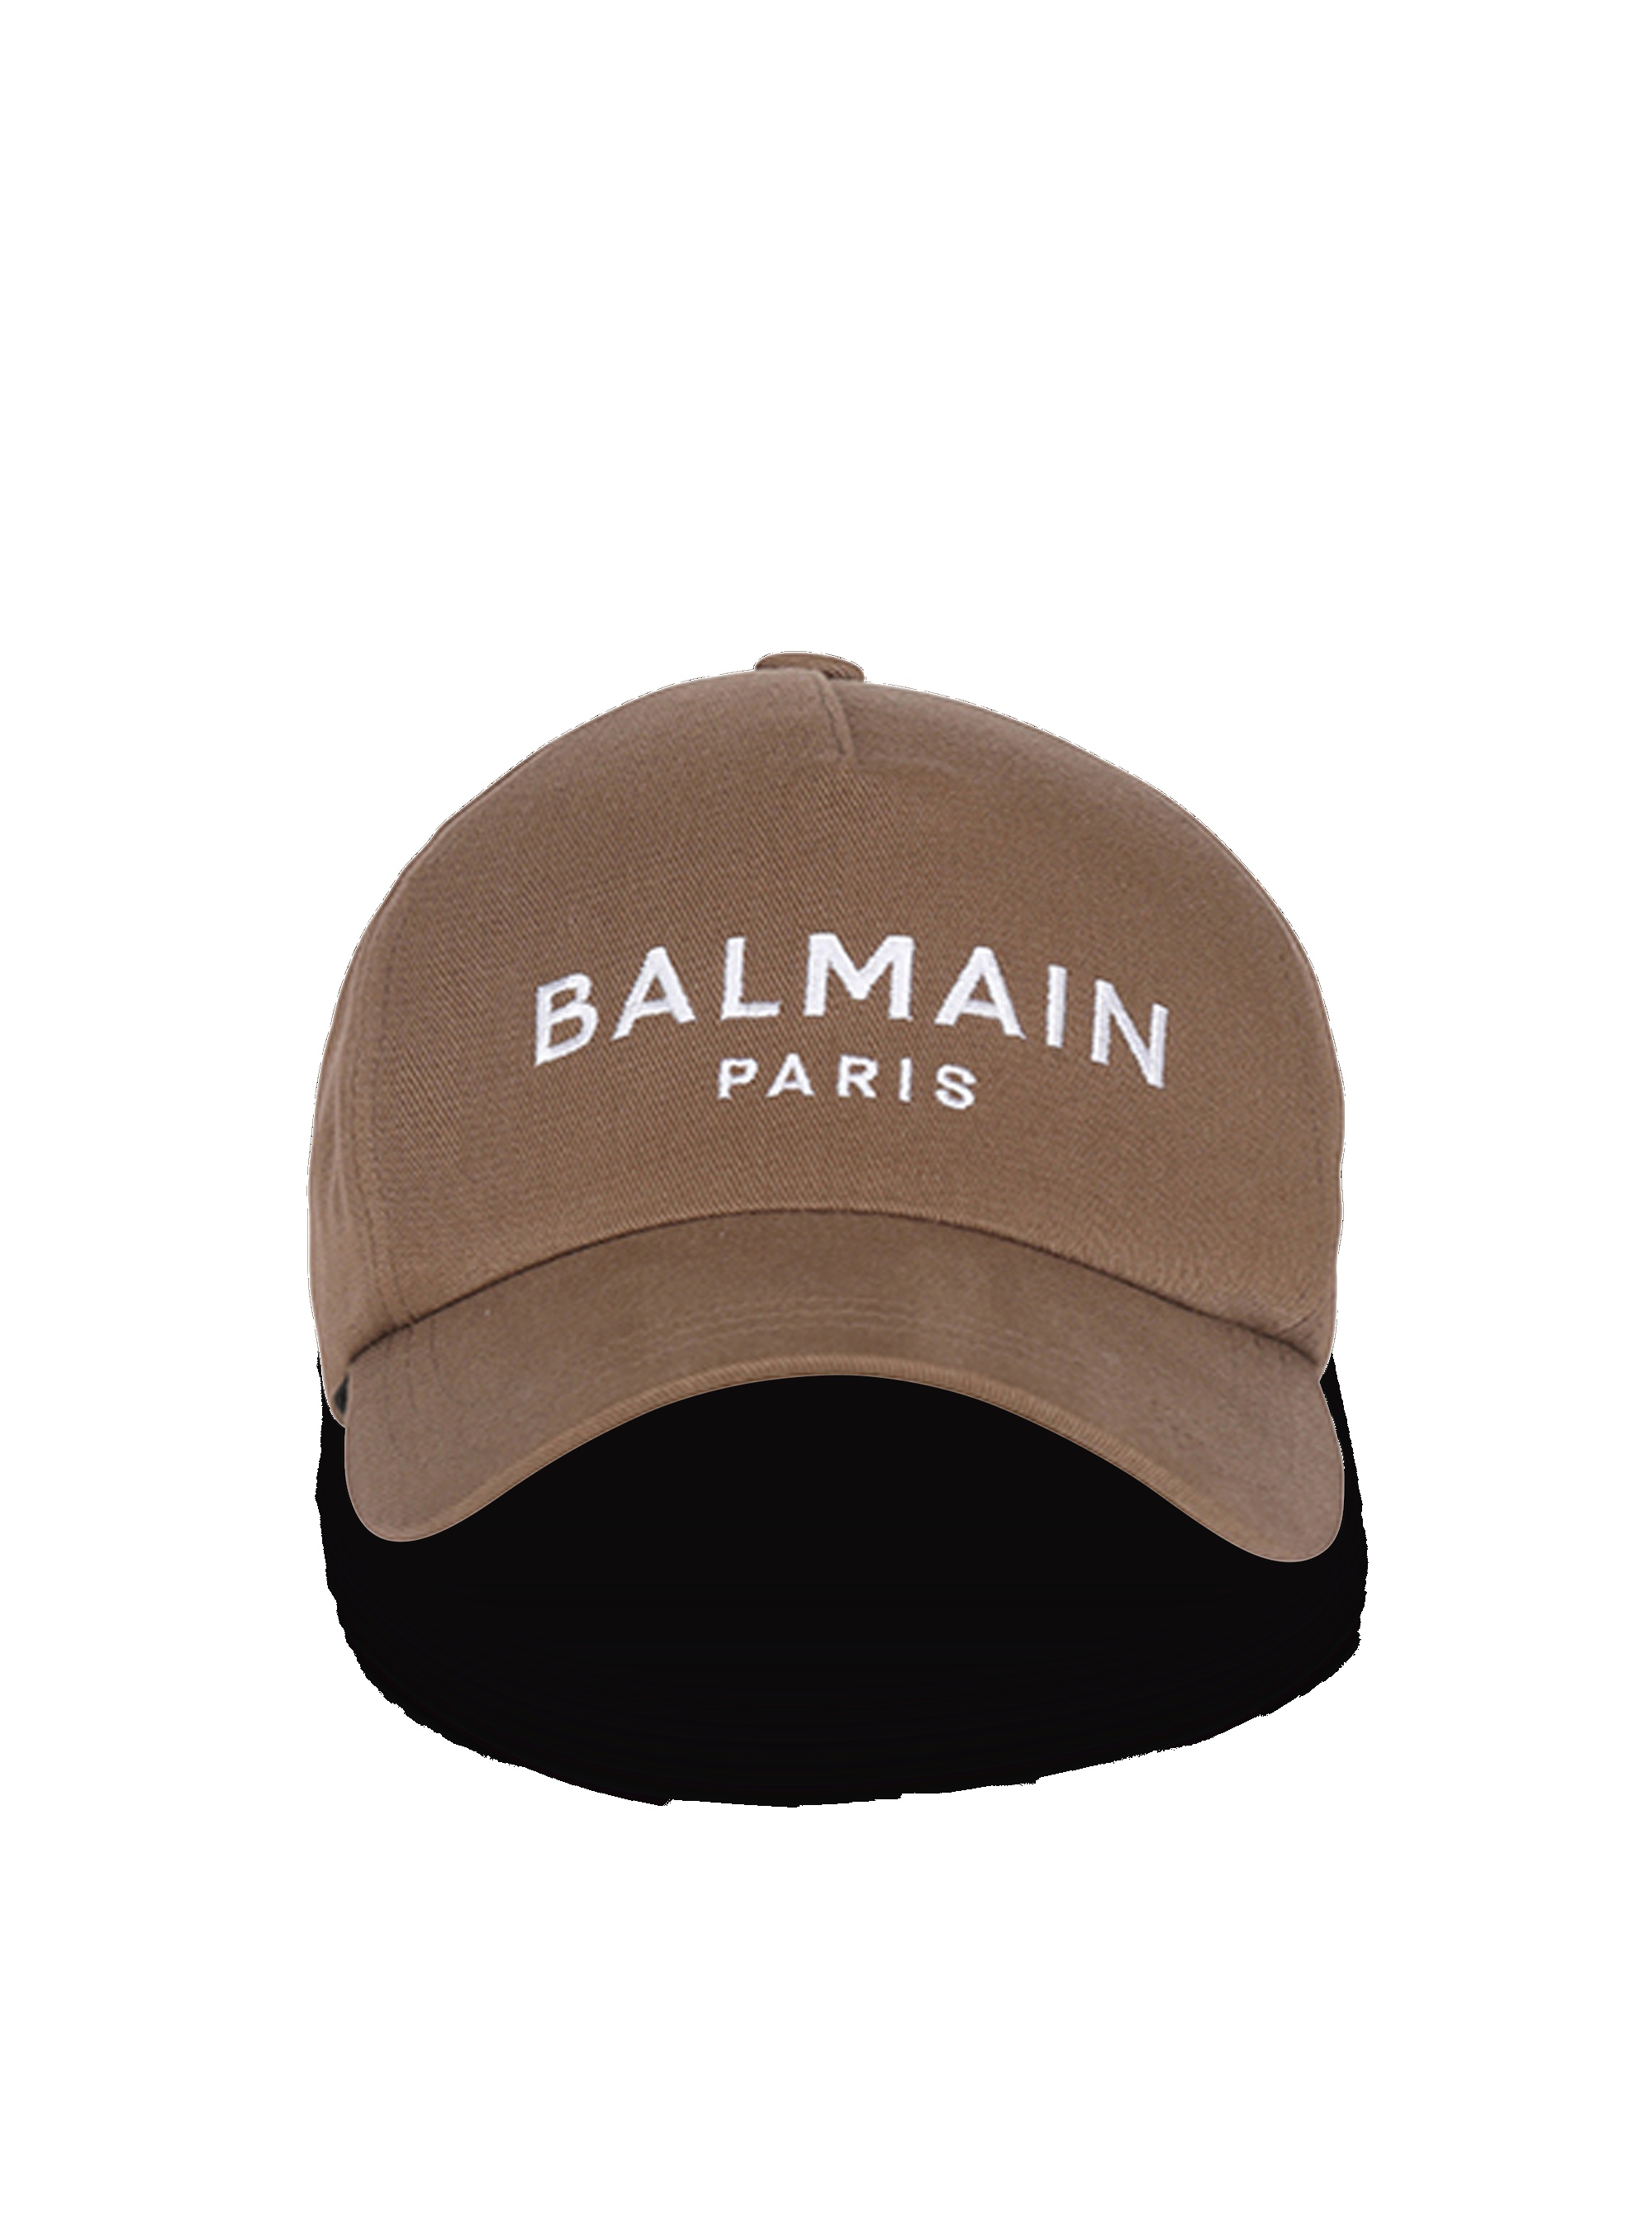 Cotton cap with Balmain Paris logo - 1